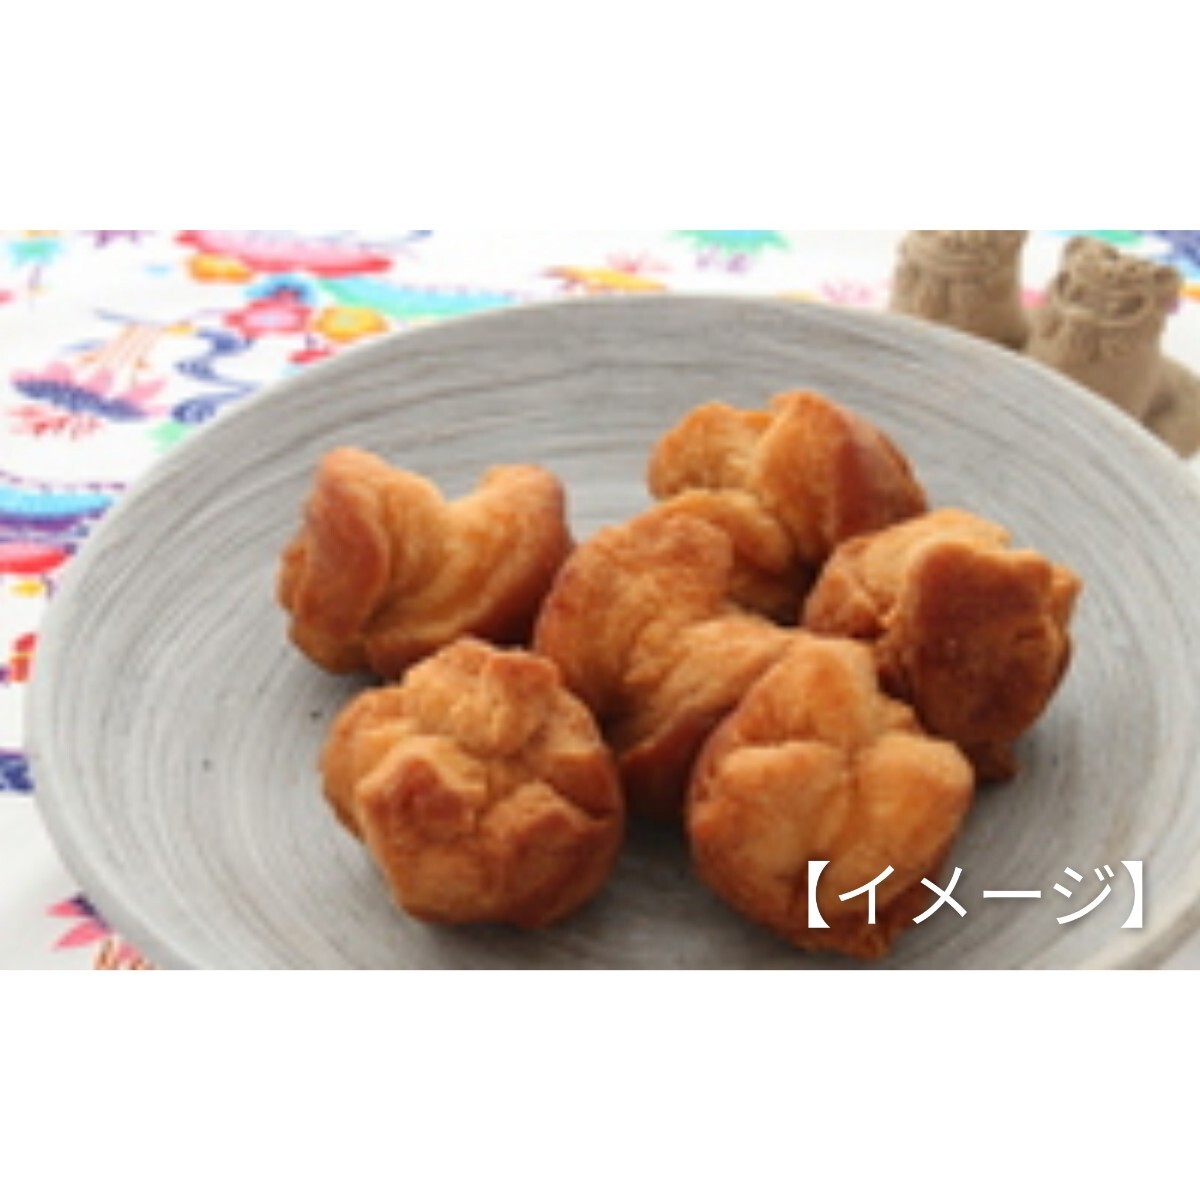 sa-ta- under gi-1 sack 10 piece entering × 2 sack plain / Okinawa confection doughnuts .-.-....-. earth production 